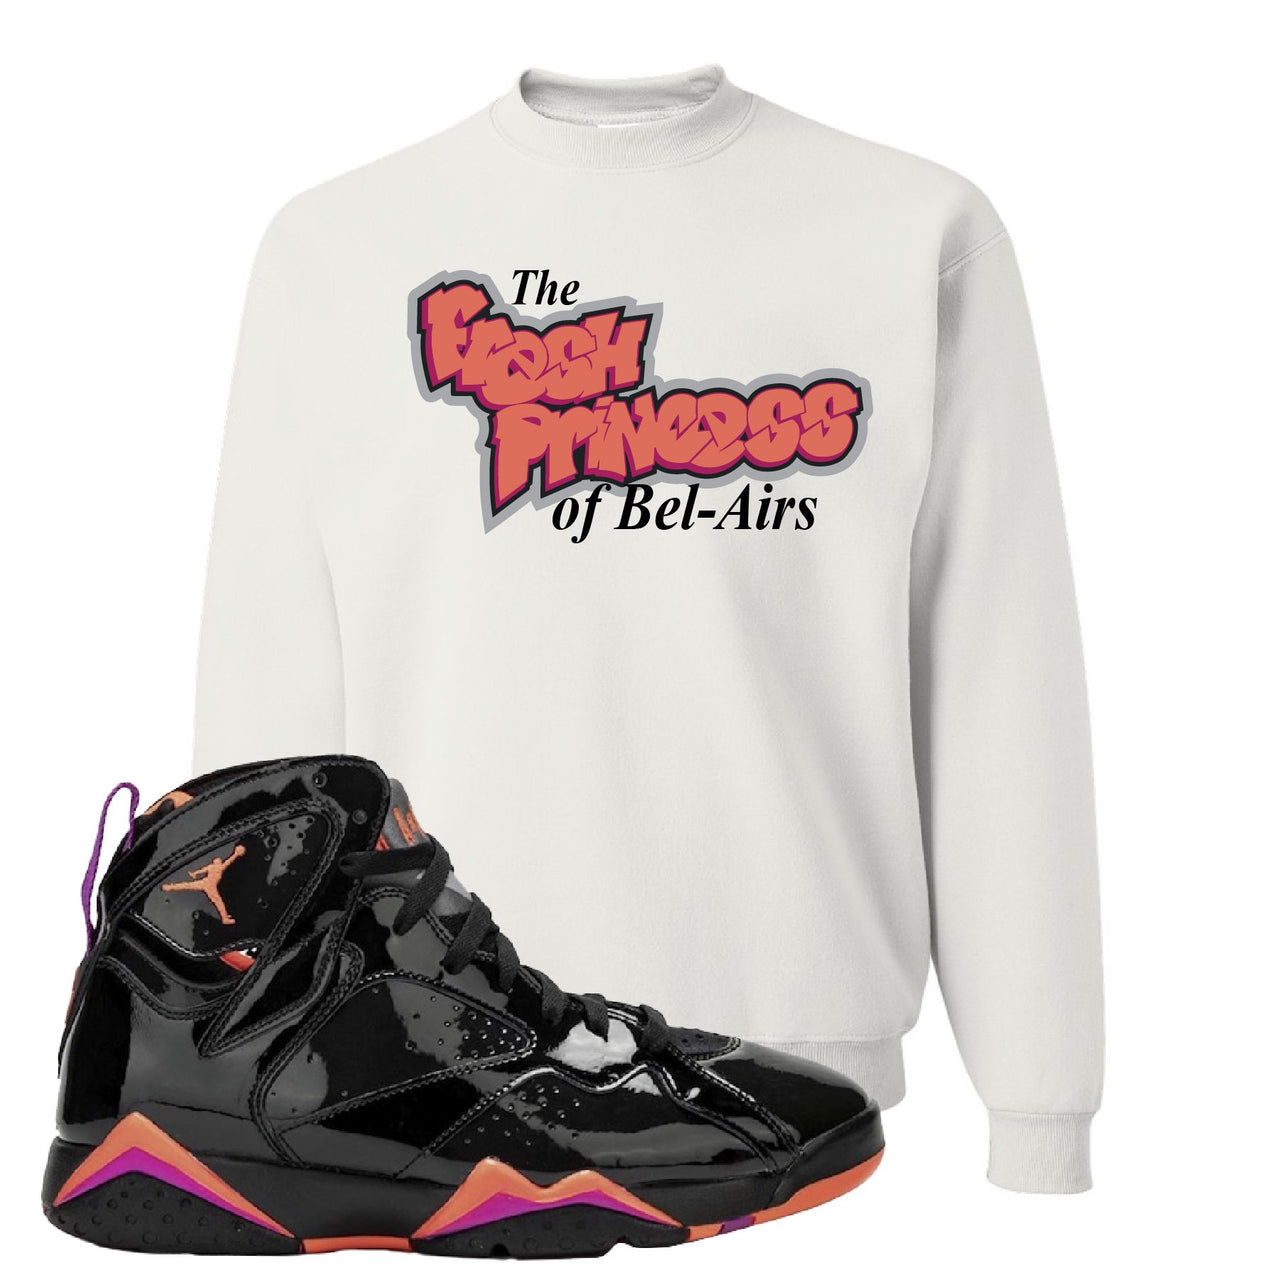 Jordan 7 WMNS Black Patent Leather The Fresh Princess of Bel Air White Sneaker Hook Up Crewneck Sweatshirt